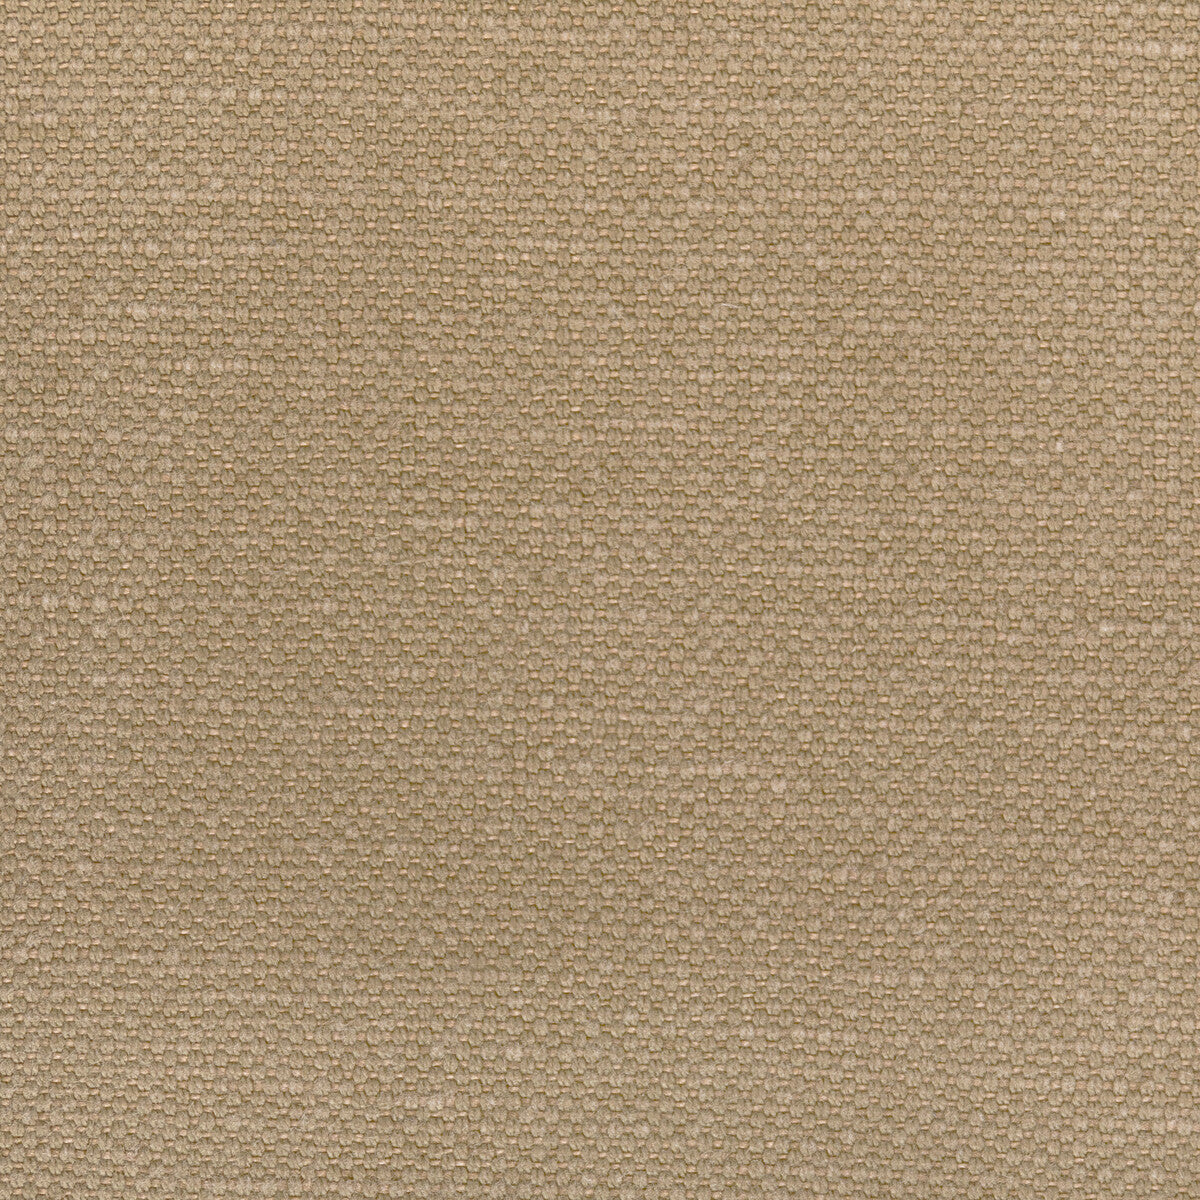 Carson fabric in tea color - pattern 36282.6116.0 - by Kravet Basics